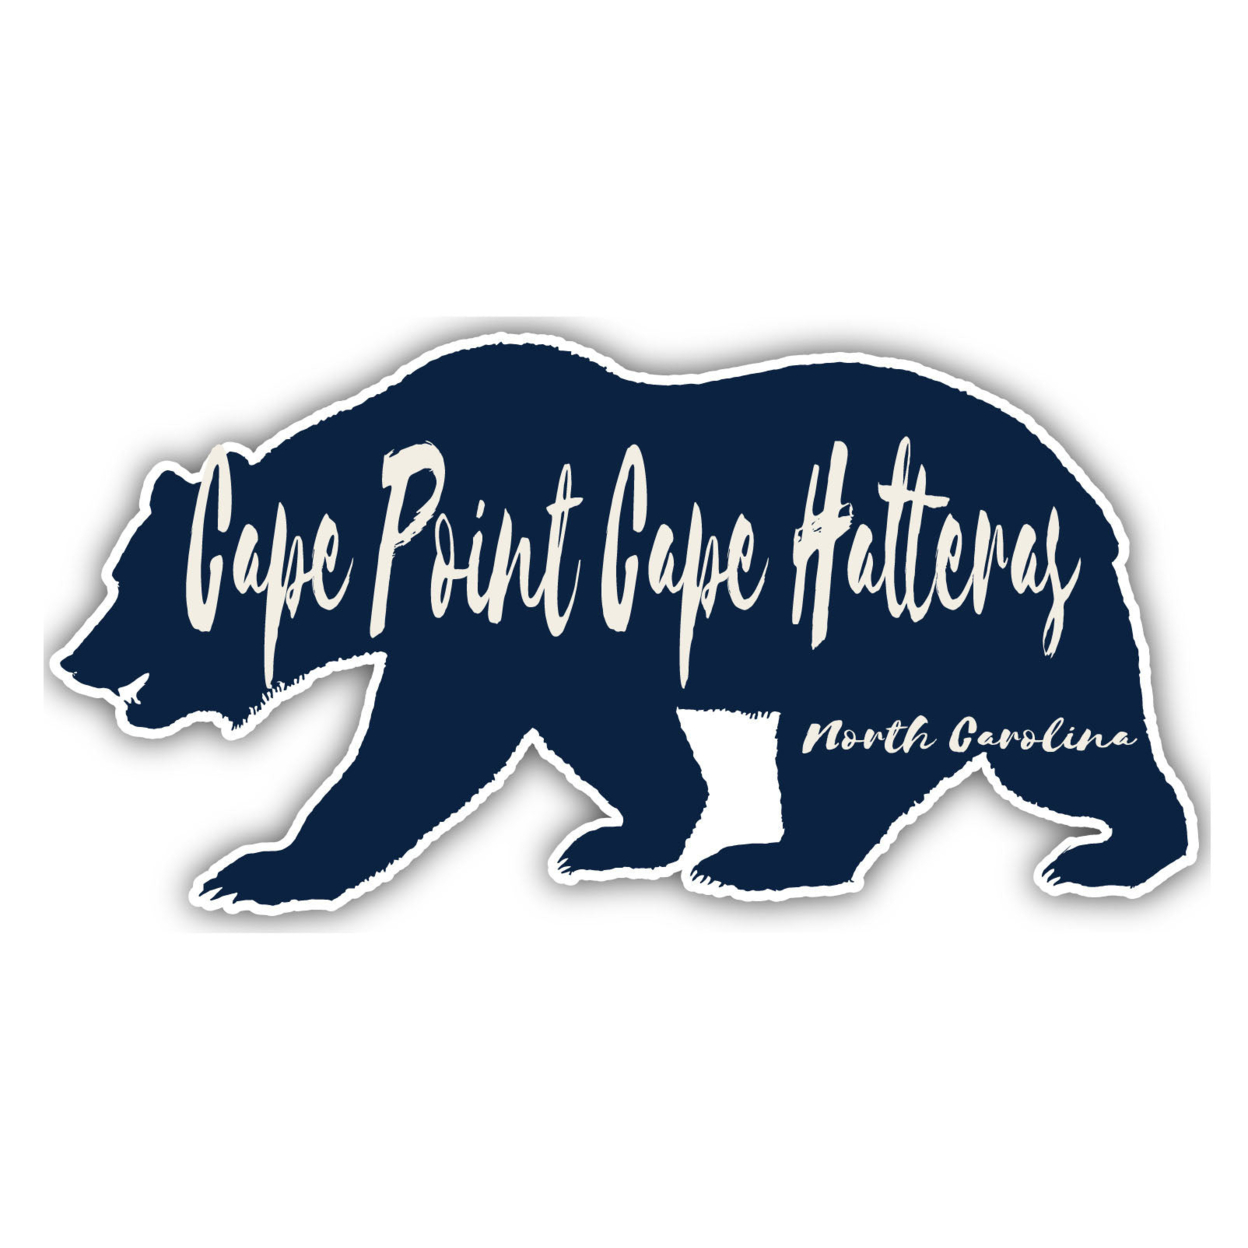 Cape Point Cape Hatteras North Carolina Souvenir Decorative Stickers (Choose Theme And Size) - Single Unit, 8-Inch, Bear